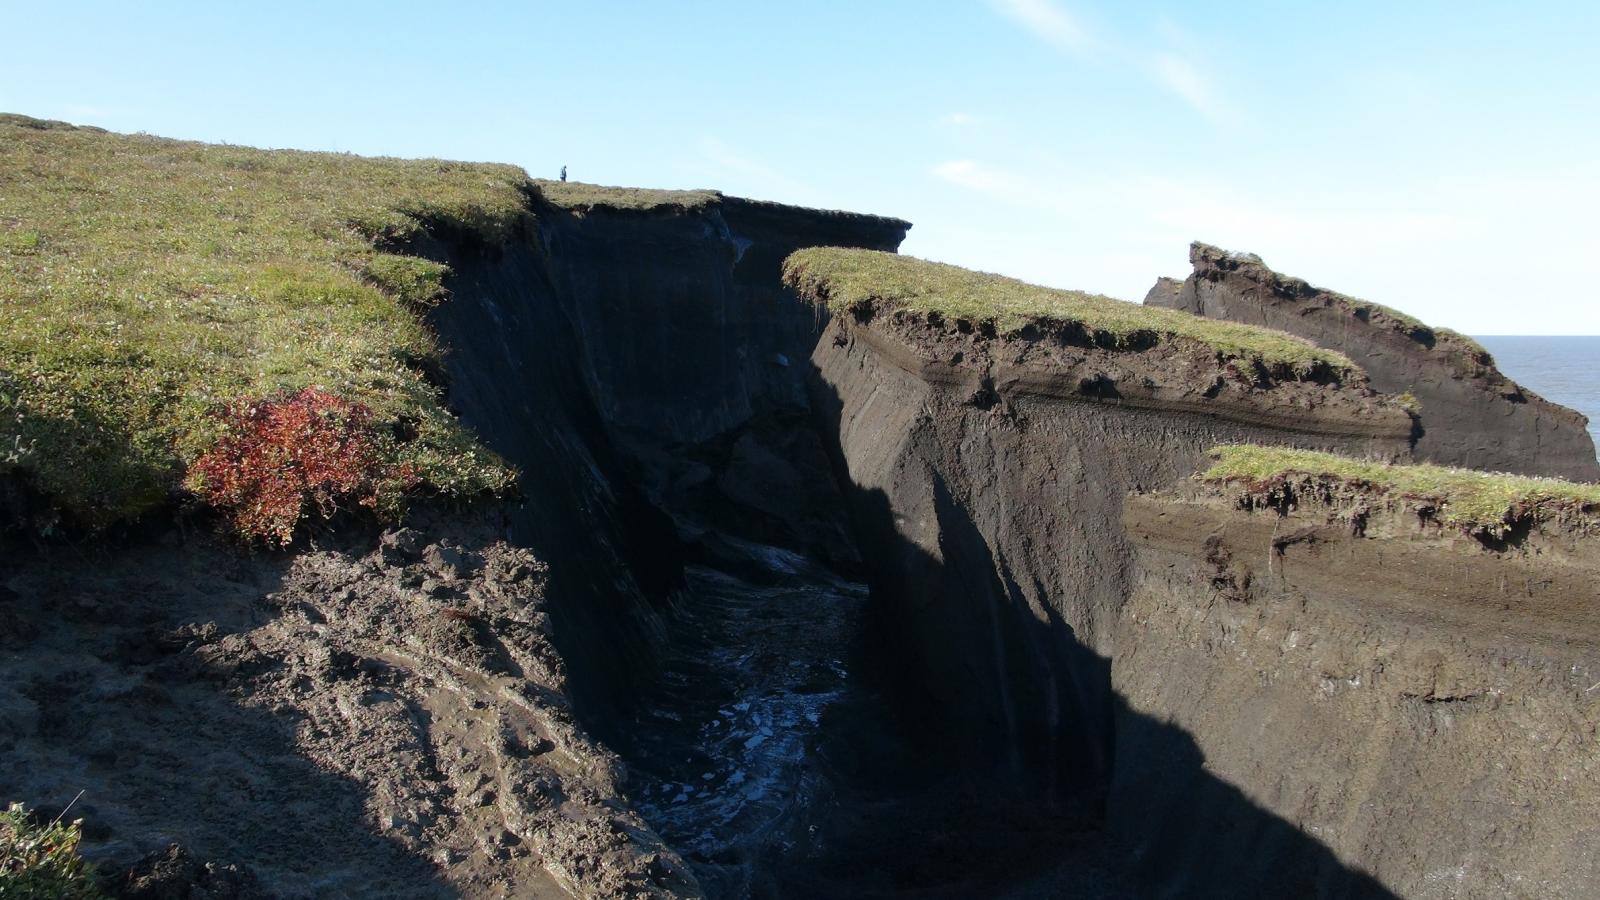 Large collapsed permafrost blocks on Pelly Island